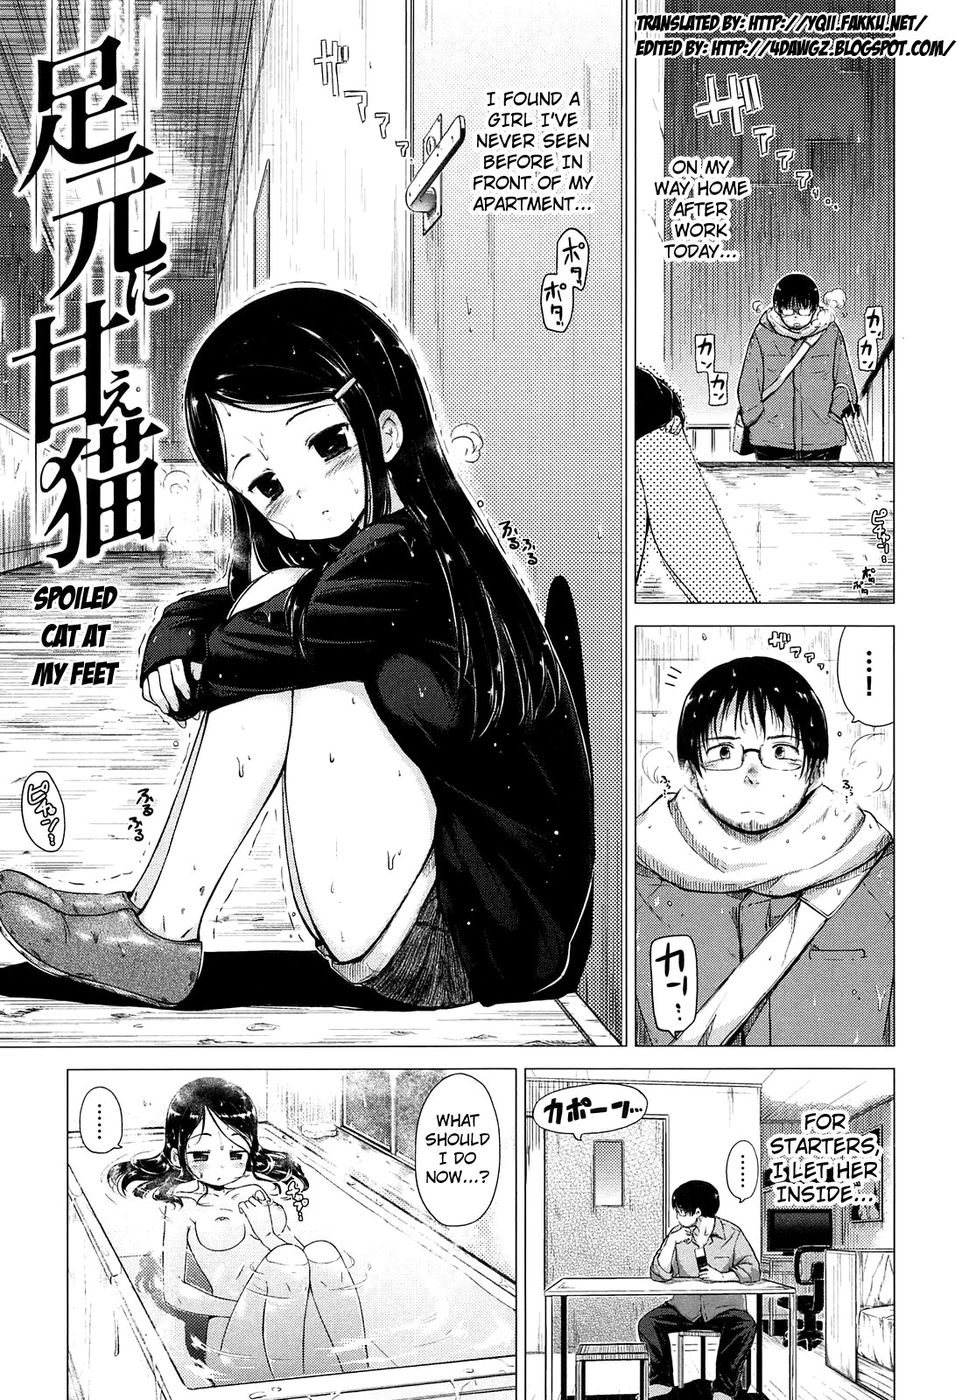 Hentai Manga Comic-Sweets Sweat-Chapter 4-Spoiled Cat At My Feet-1